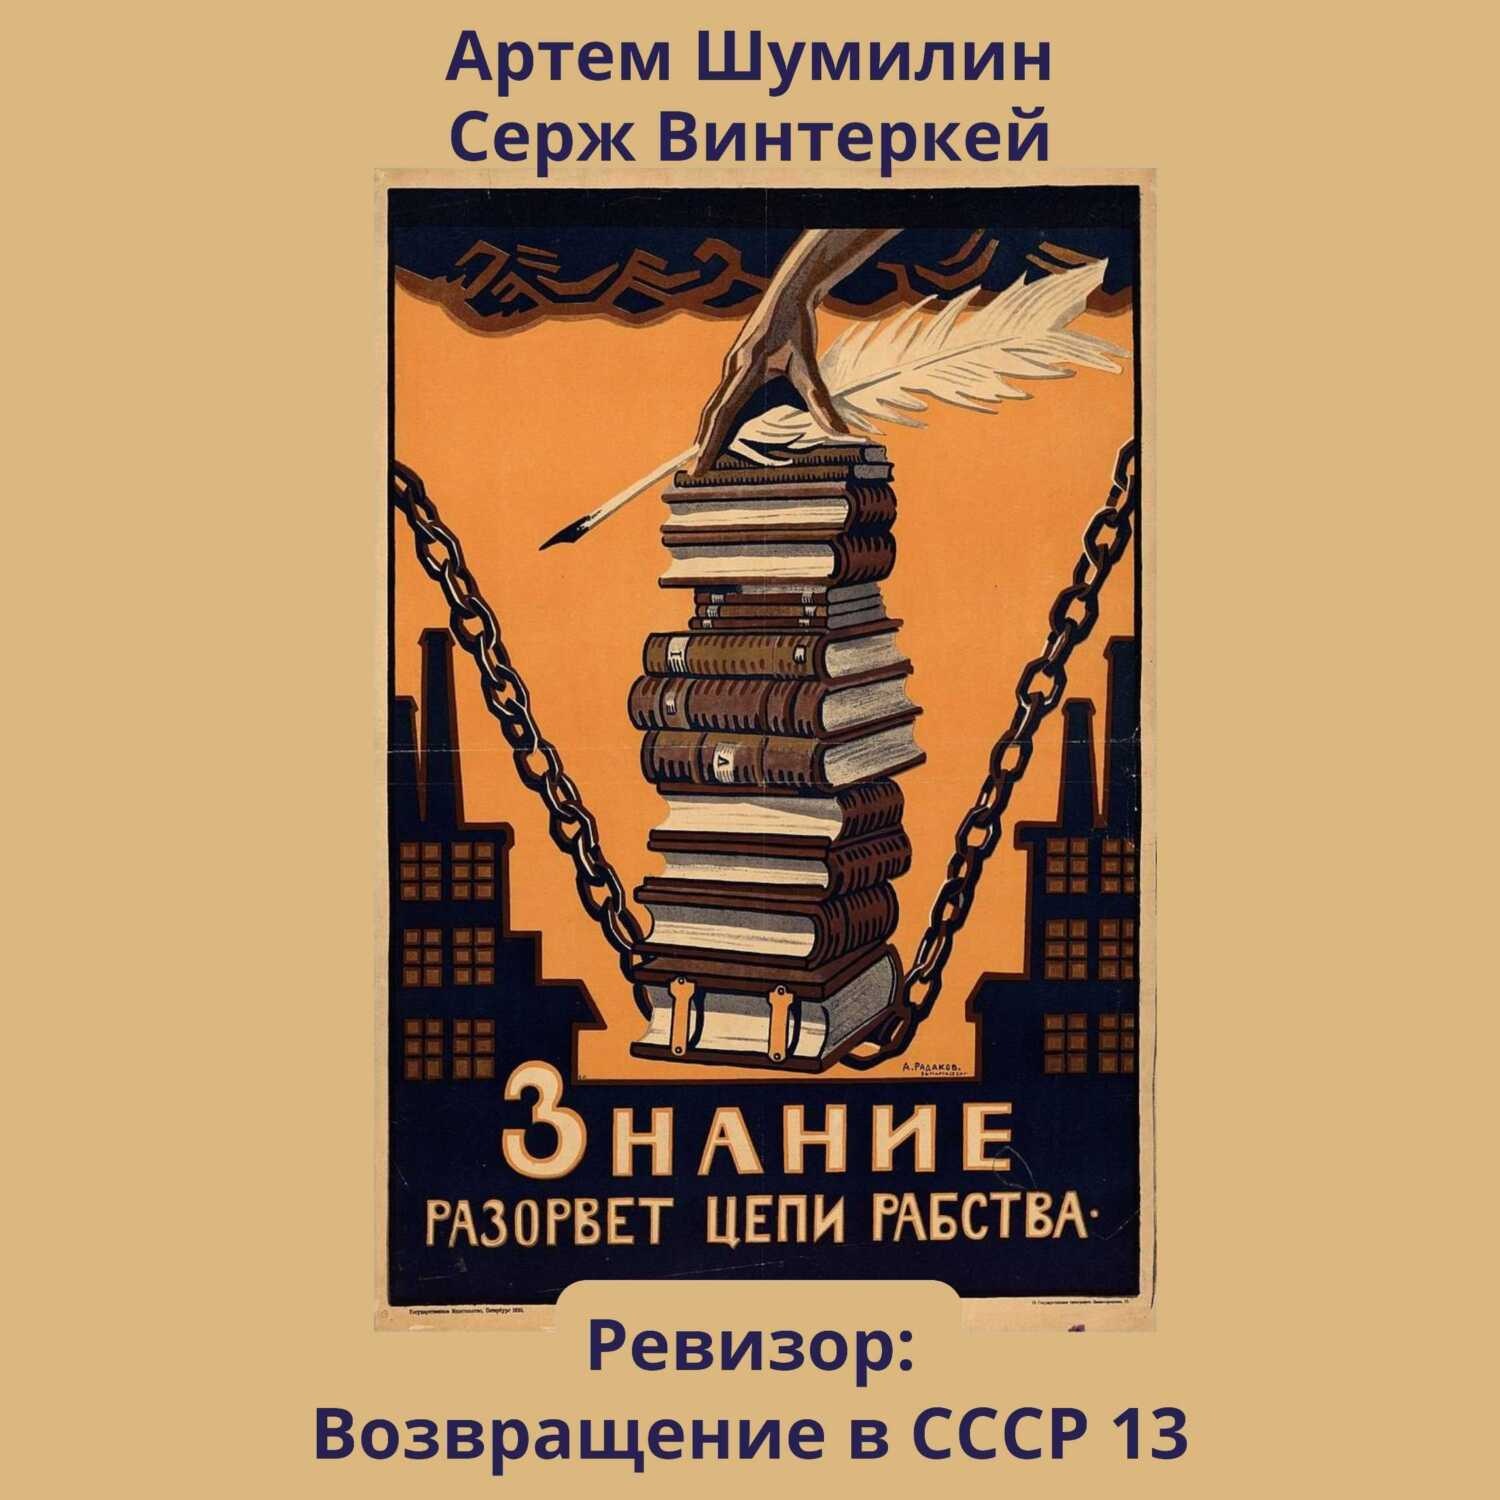 Знание разорвет цепи рабства плакат. Советские плакаты о знаниях. Плакат знания разорвут цепи. Советские плакаты про чтение. Винтеркей шумилин ревизор возвращение в ссср 14